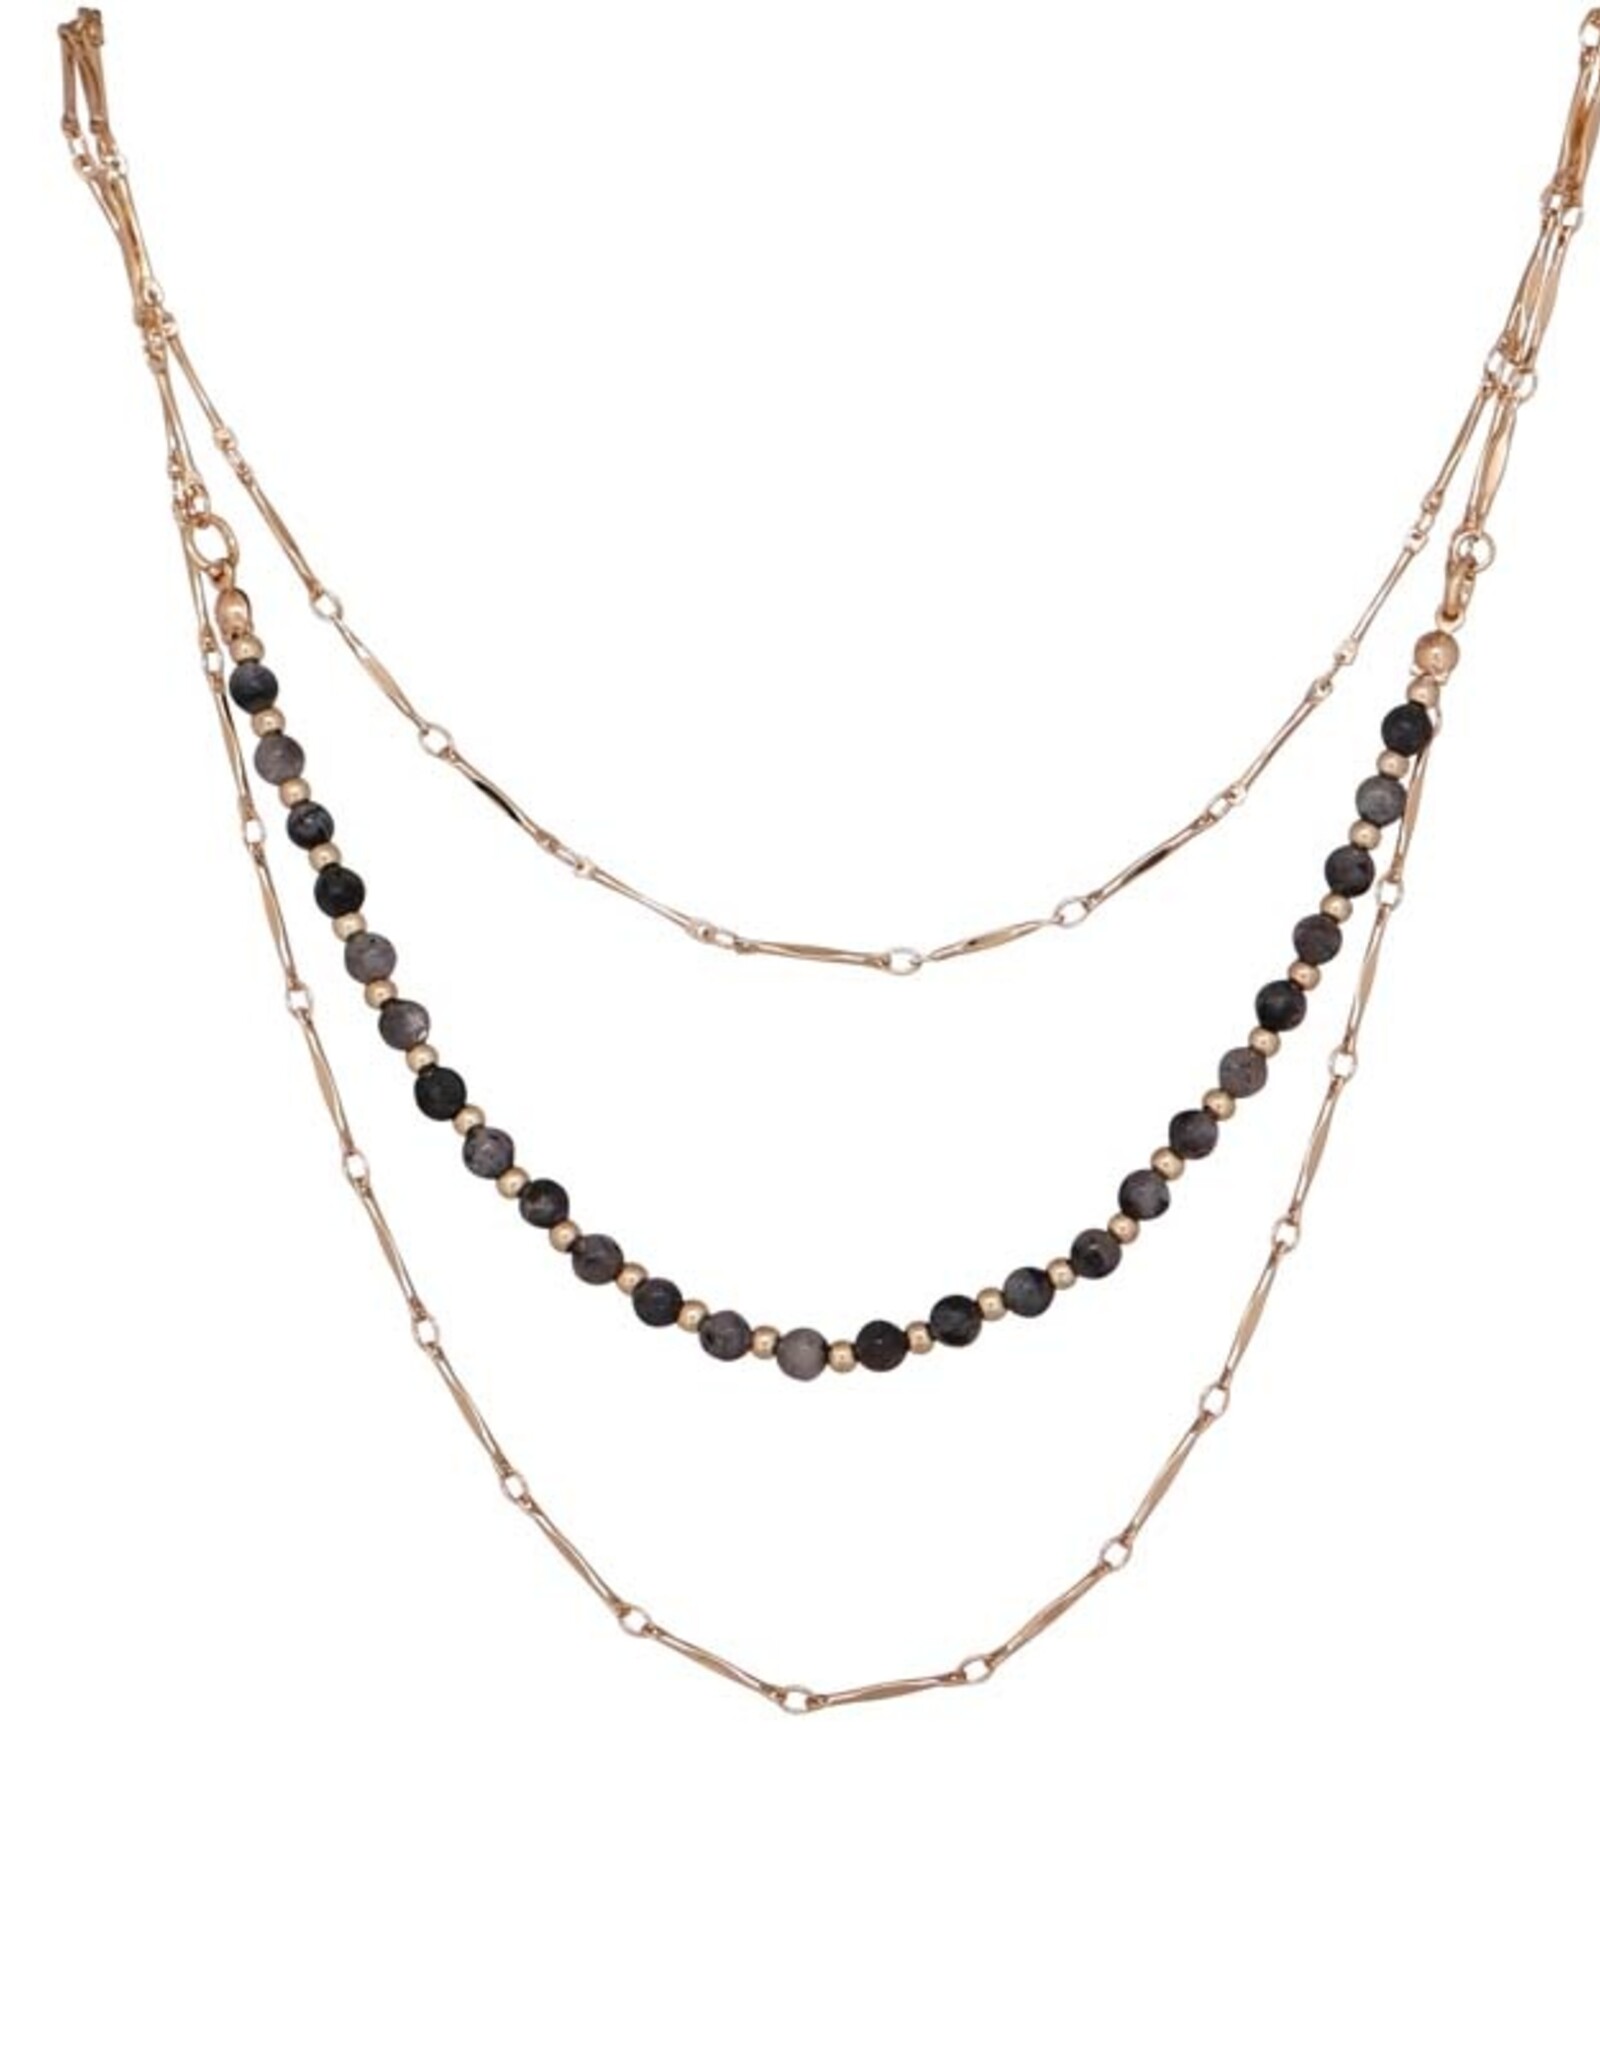 Merx Inc. Fashion Chain Necklace Gold Grey Agate 45+5CM ext